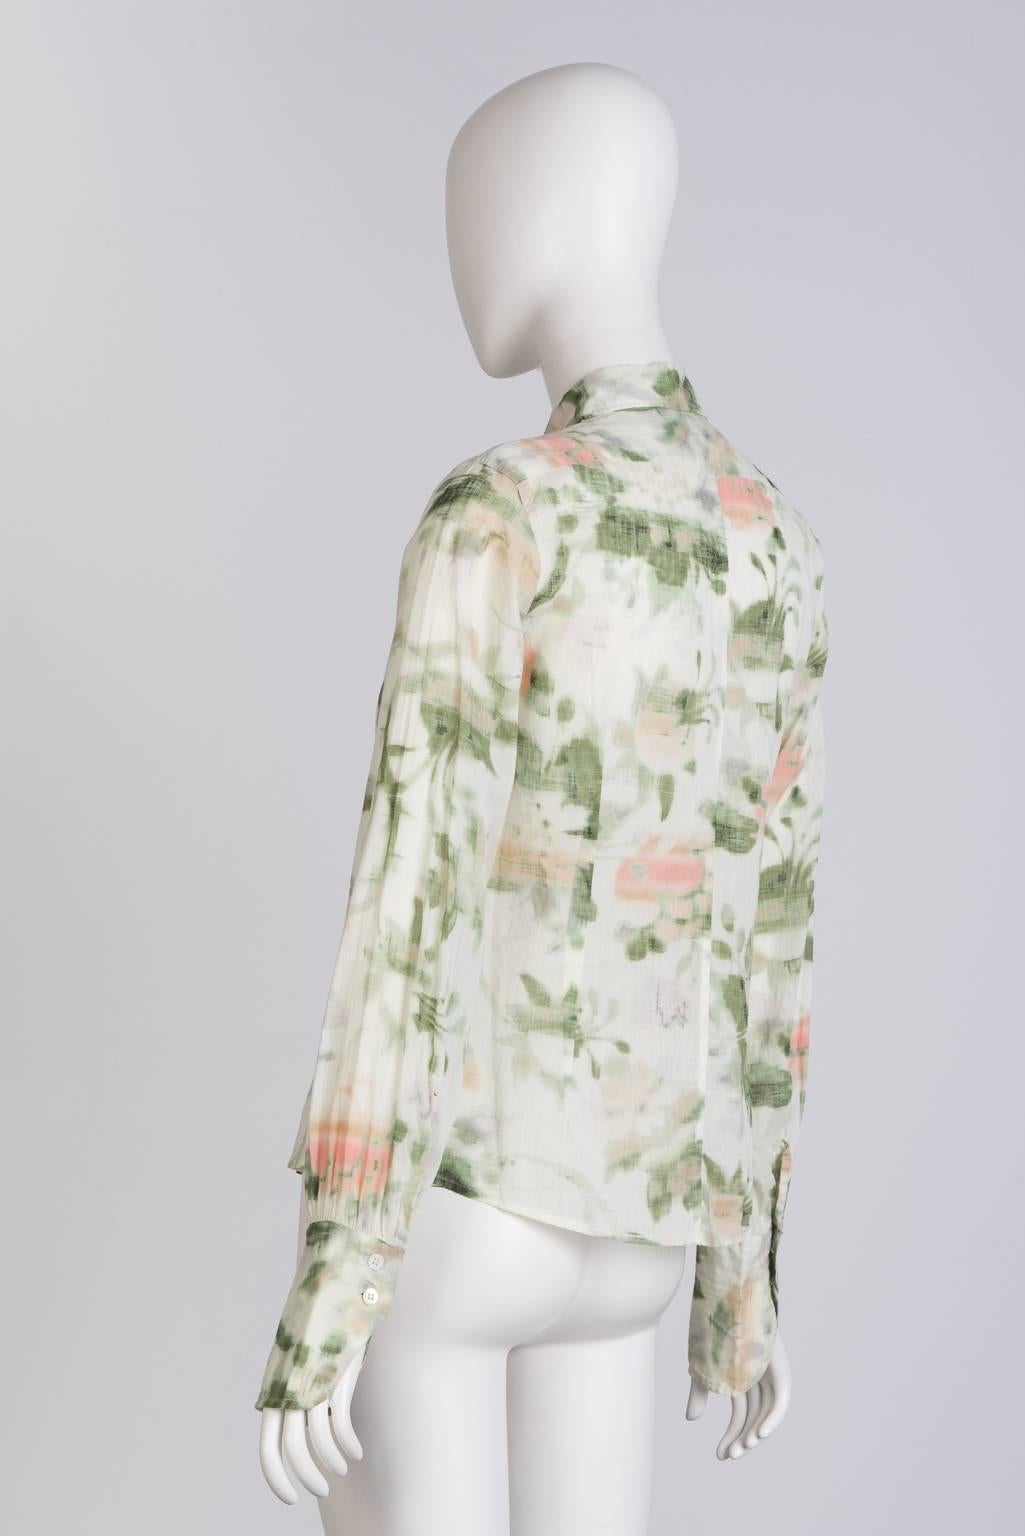  Dries Van Noten Floral Print Shirt In Excellent Condition For Sale In Xiamen, Fujian